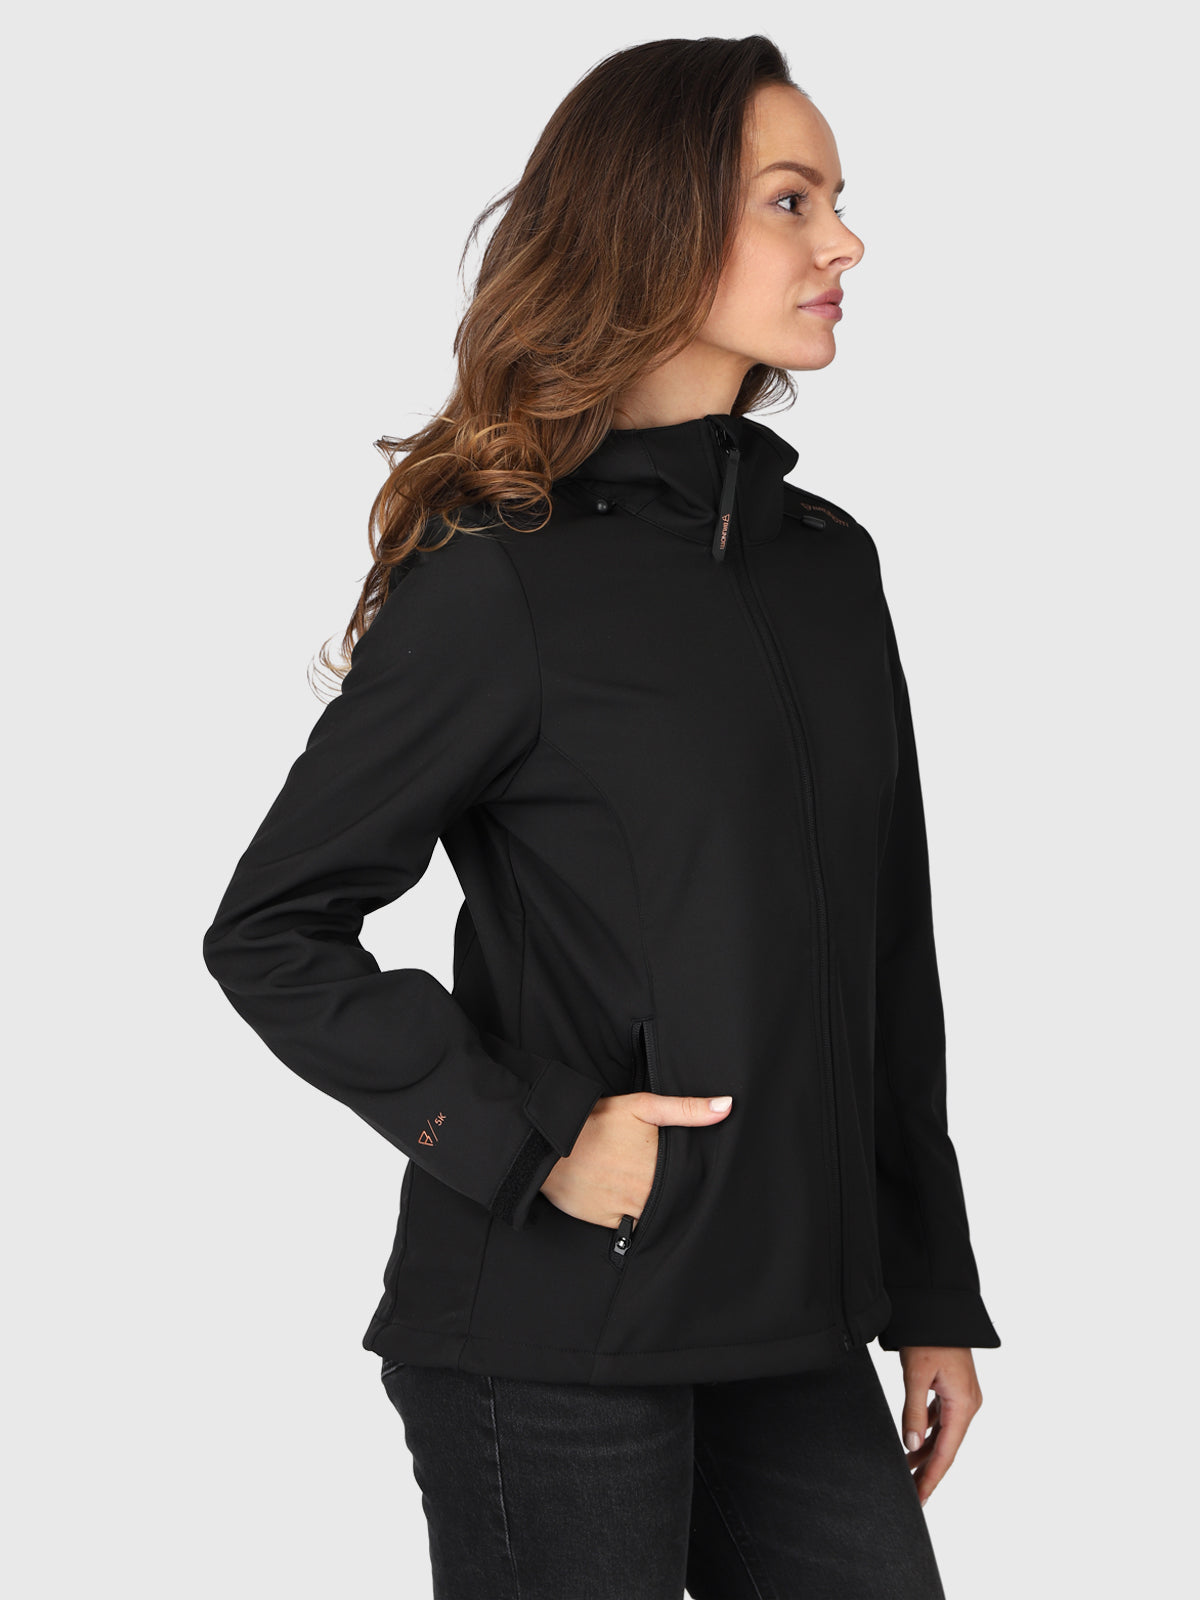 Joos-N Women Softshell Jacket | Black